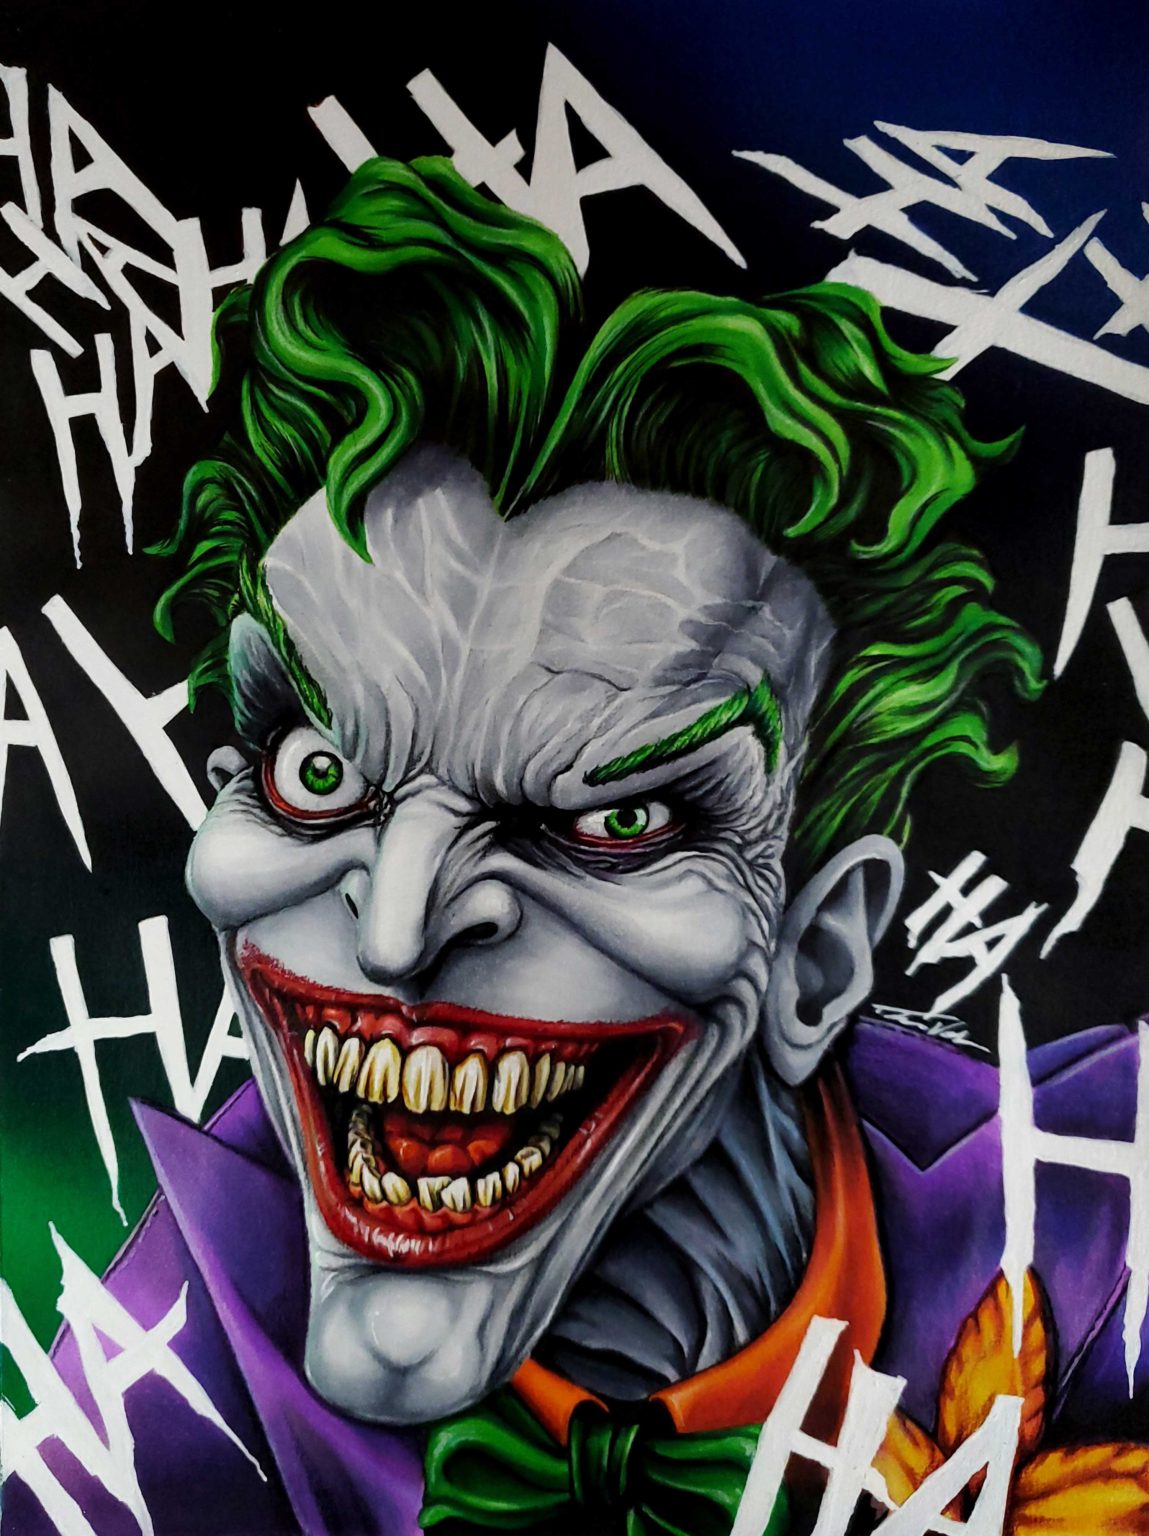 Mixed media illustration of The Joker